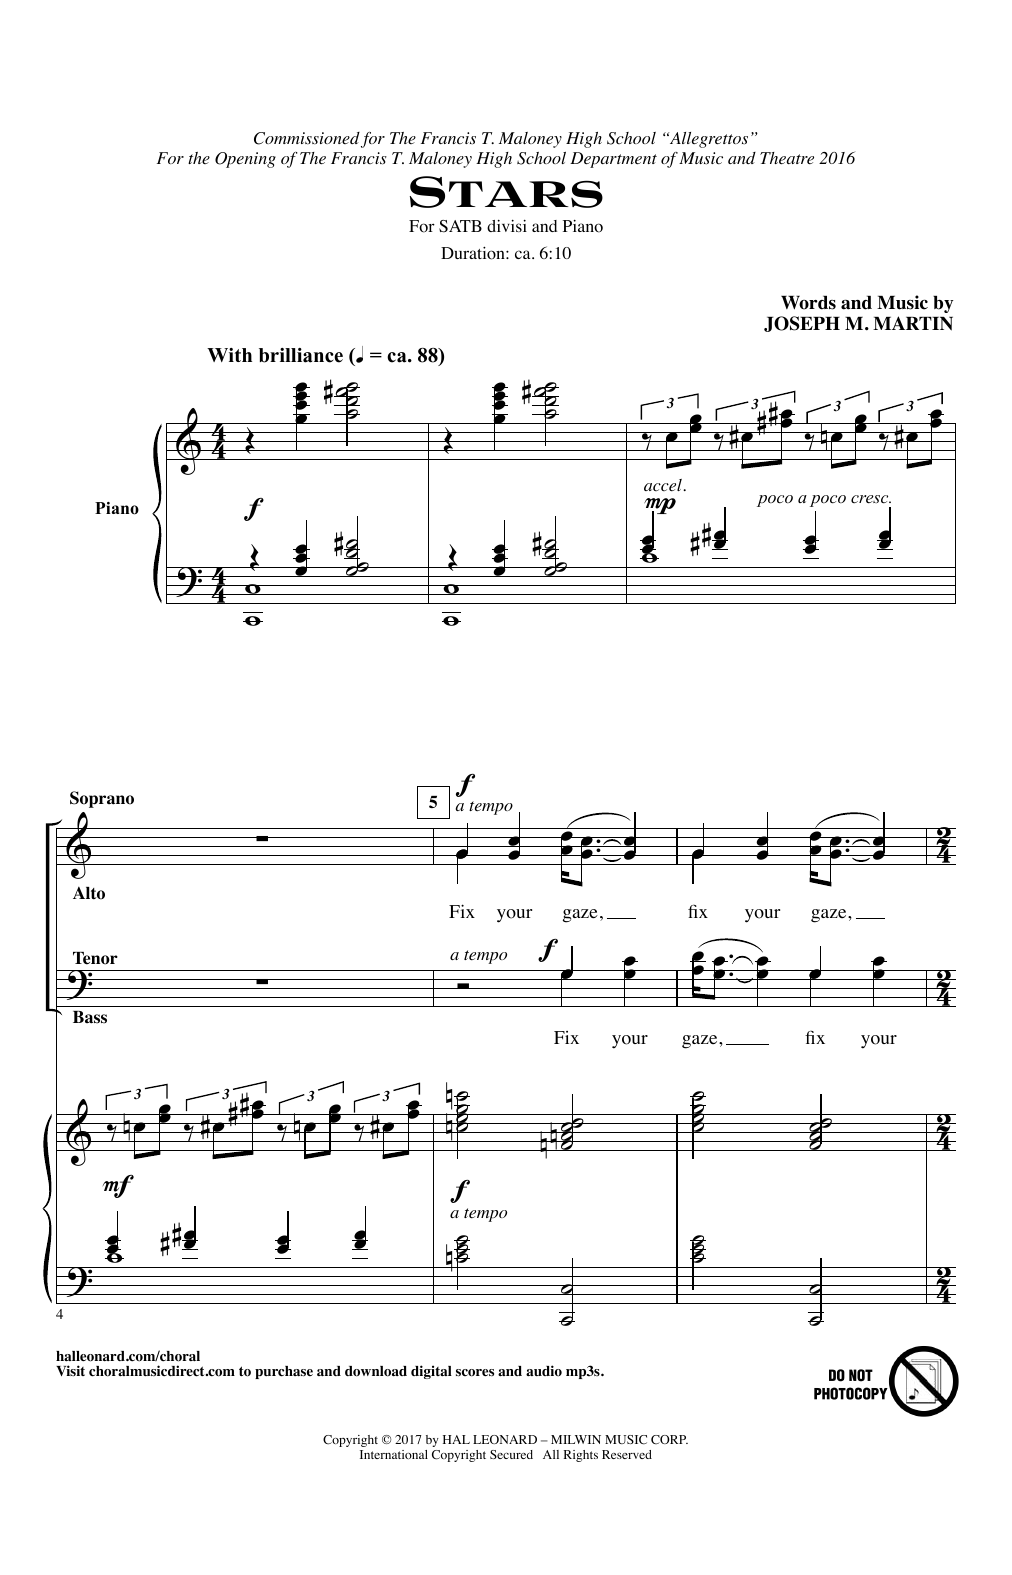 Joseph Martin Stars Sheet Music Notes & Chords for SATB - Download or Print PDF